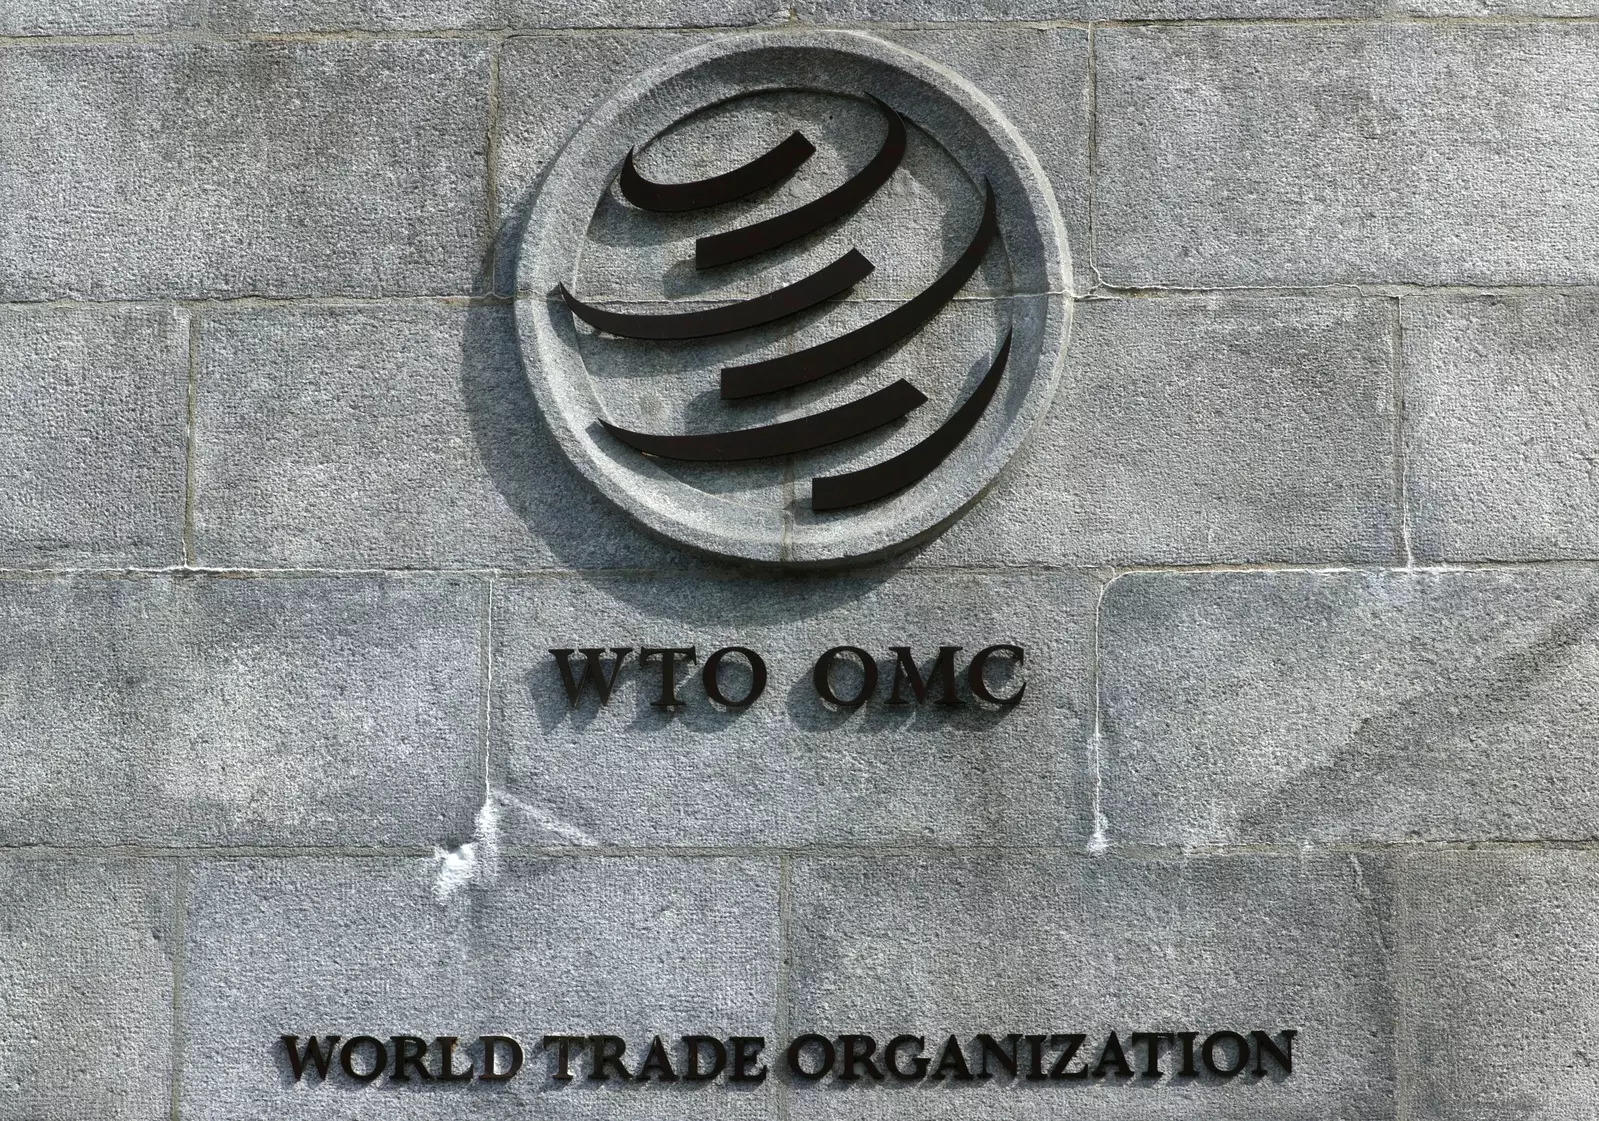 World Trade Organisation (WTO) headquarters in Geneva